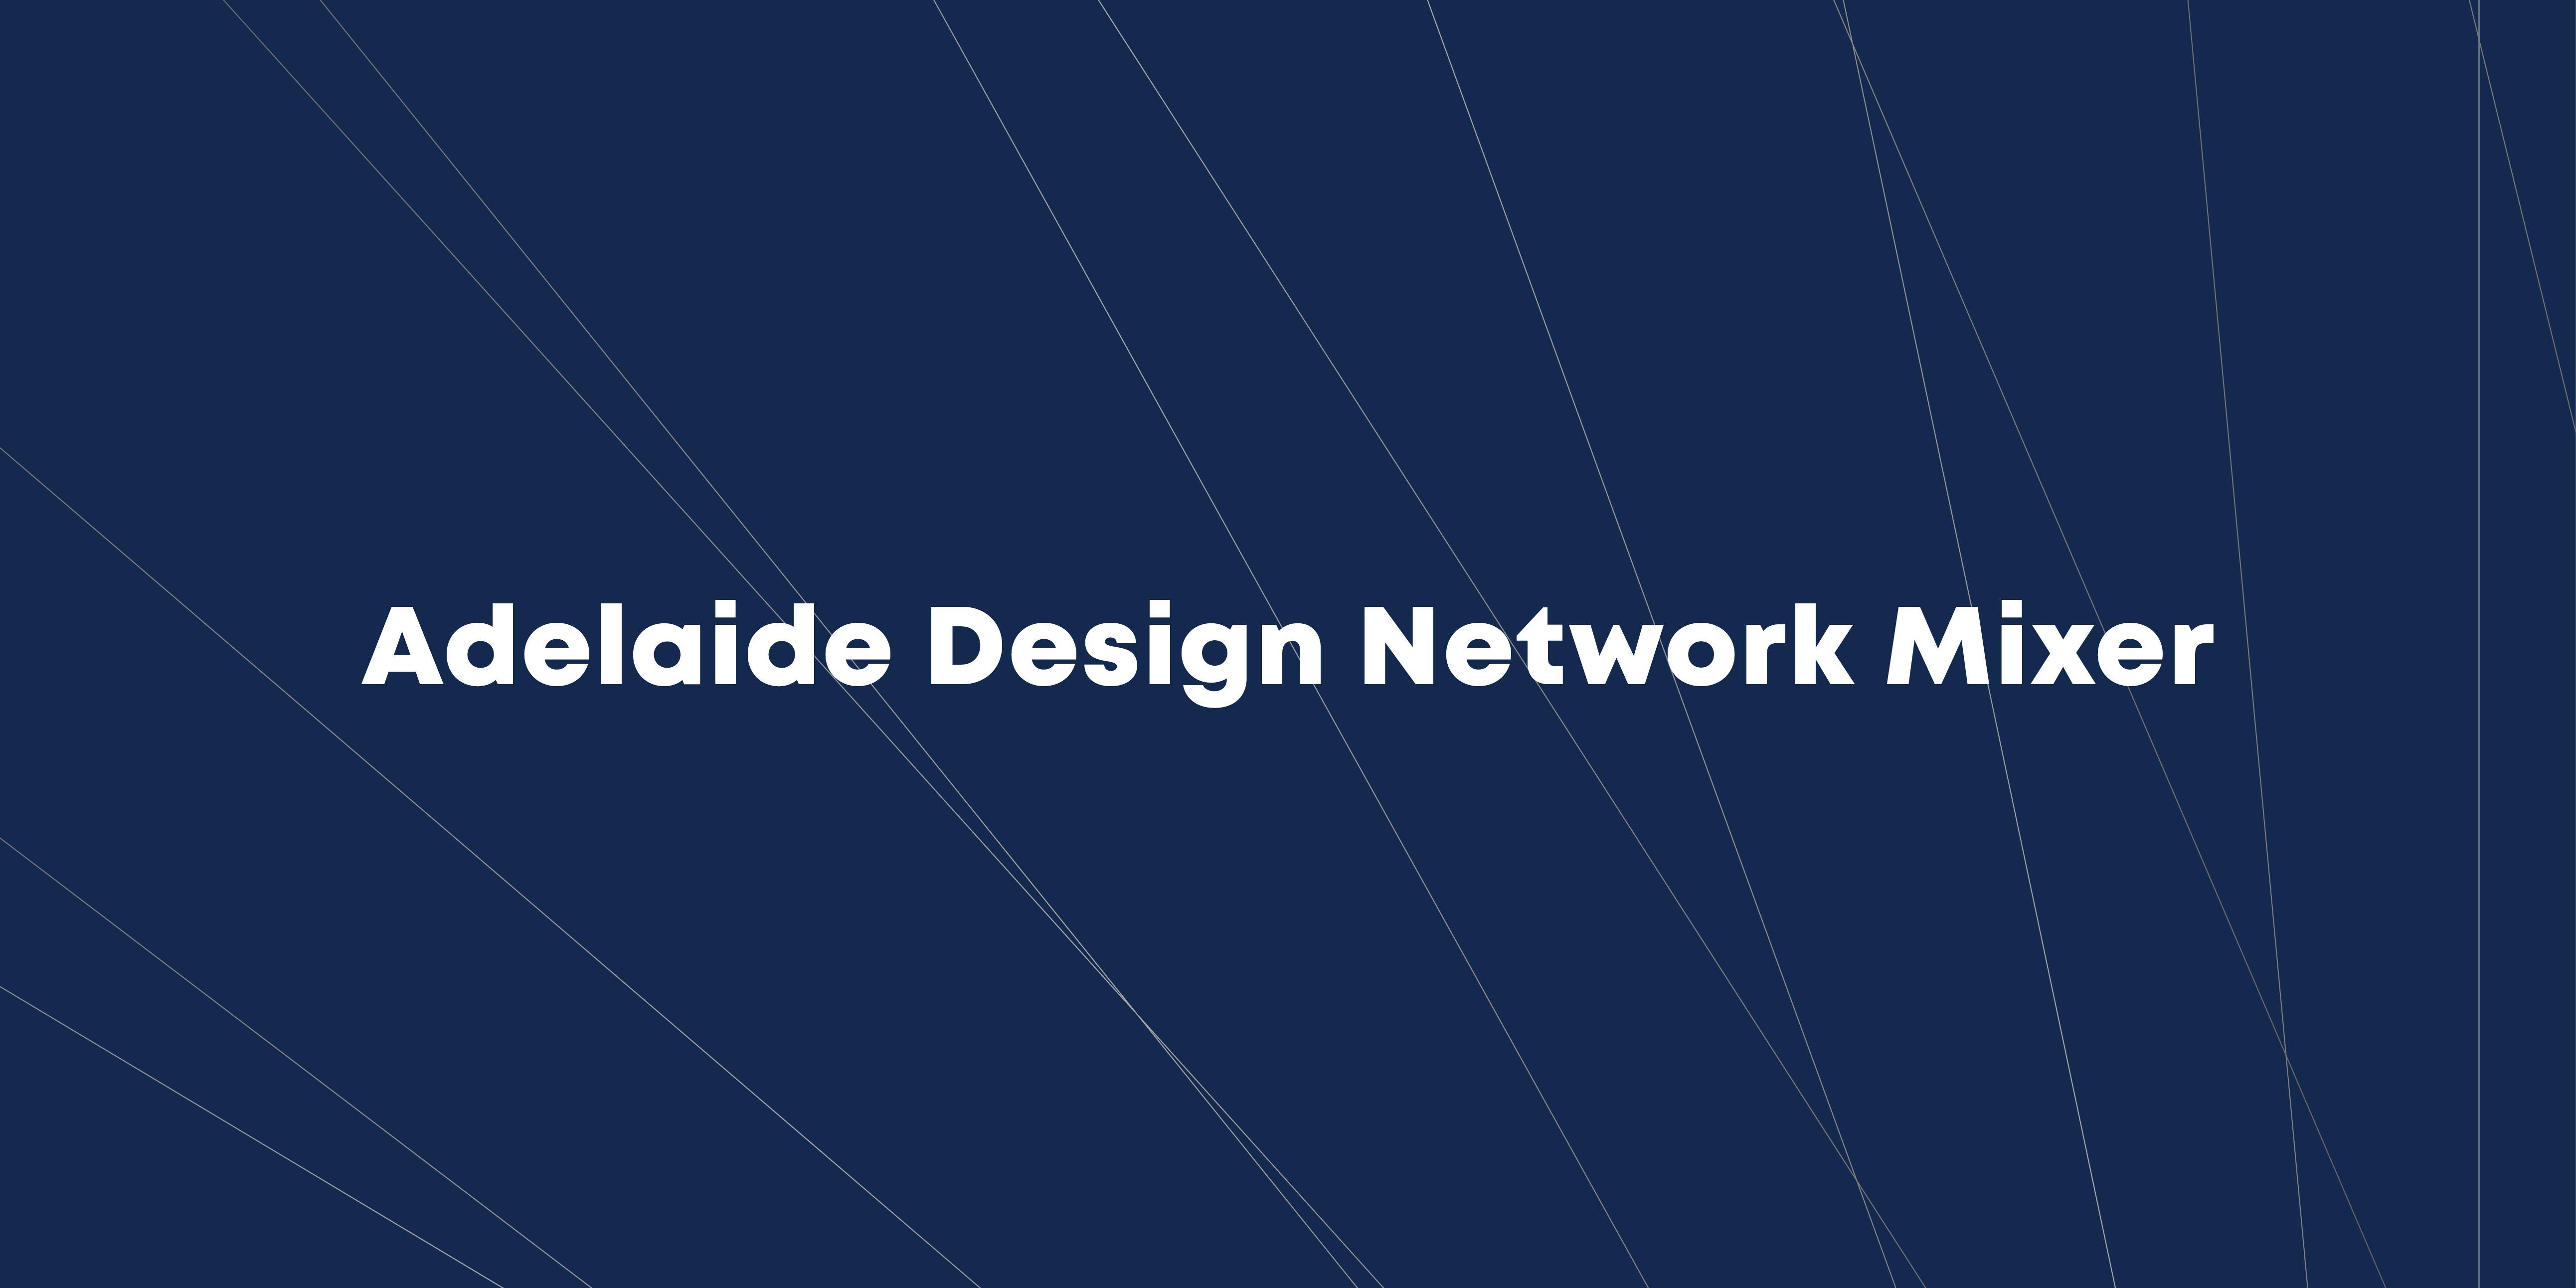 Design Network Mixer